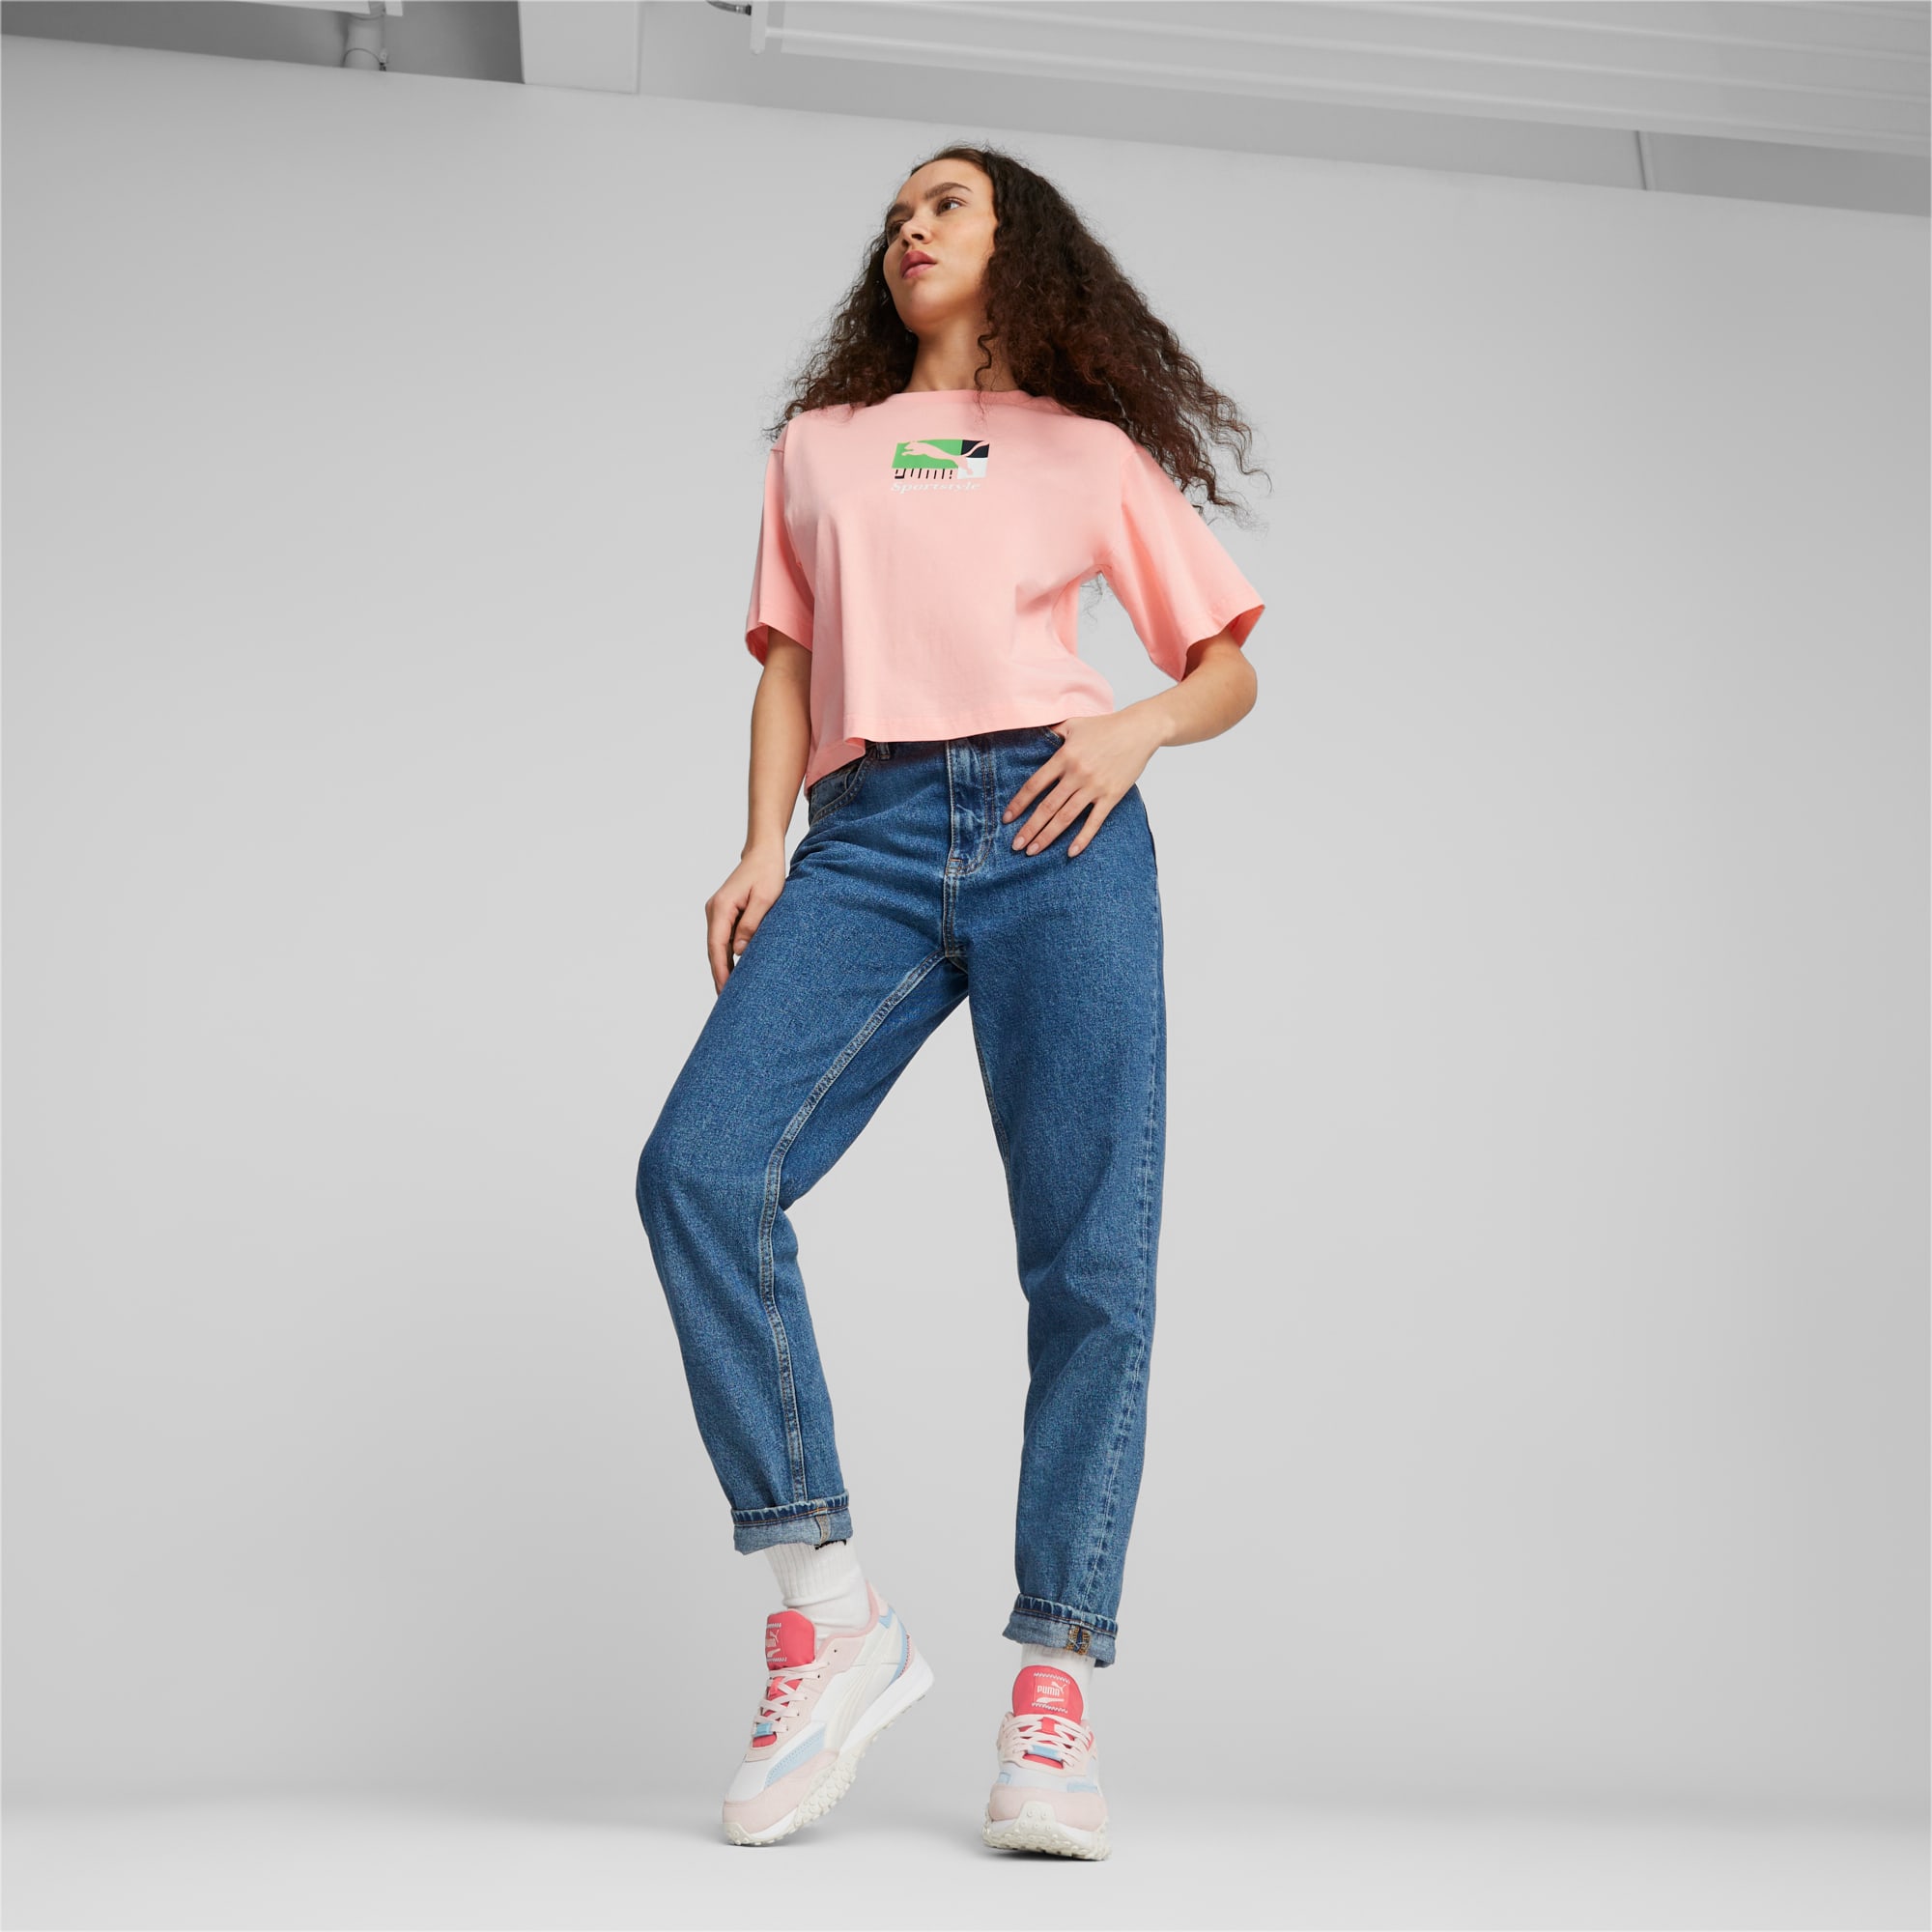 PUMA Classics Brand Love Women's T-Shirt, Peach Smoothie, Size S, Clothing